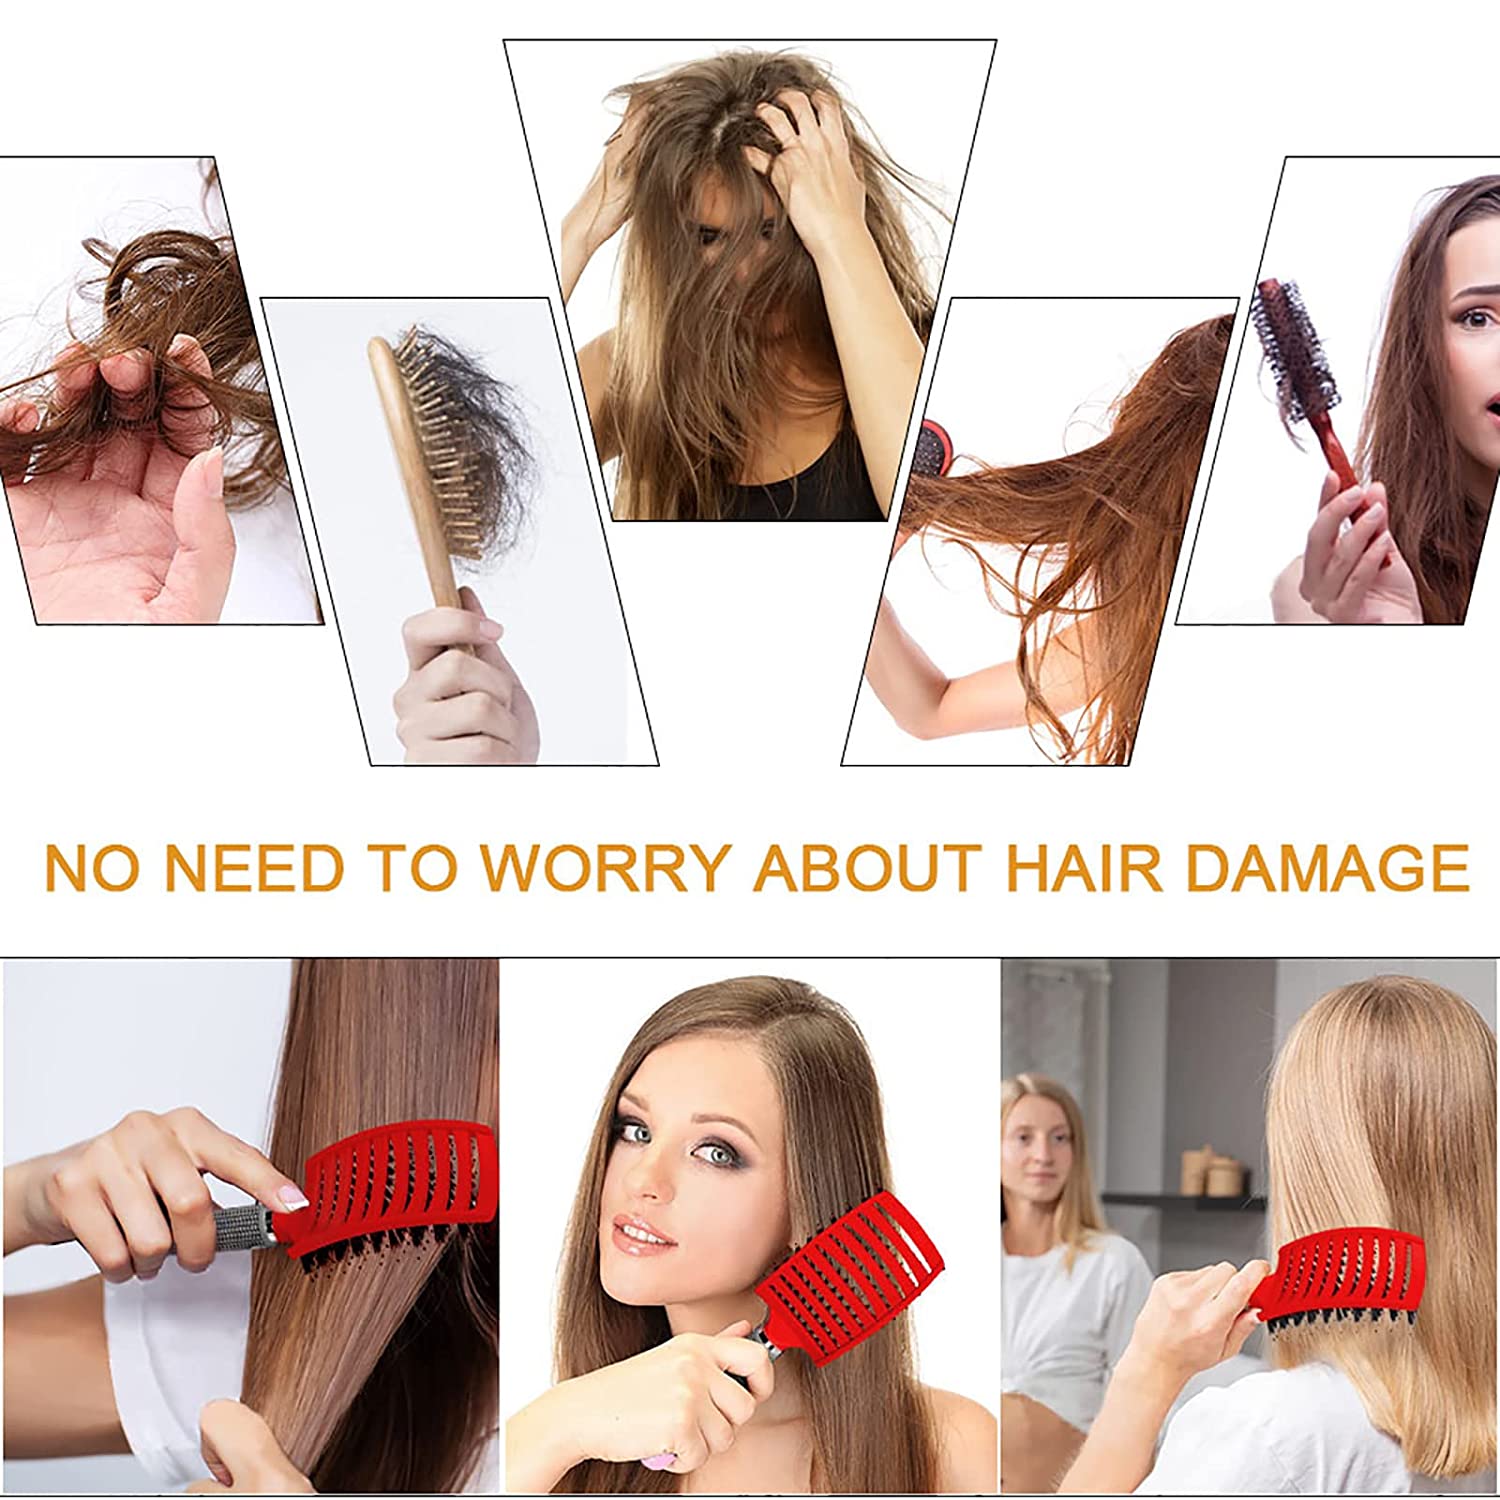 Silky Brush™ - Detangle Hair Brush - Buy 1, Add A 2nd For Only $8!